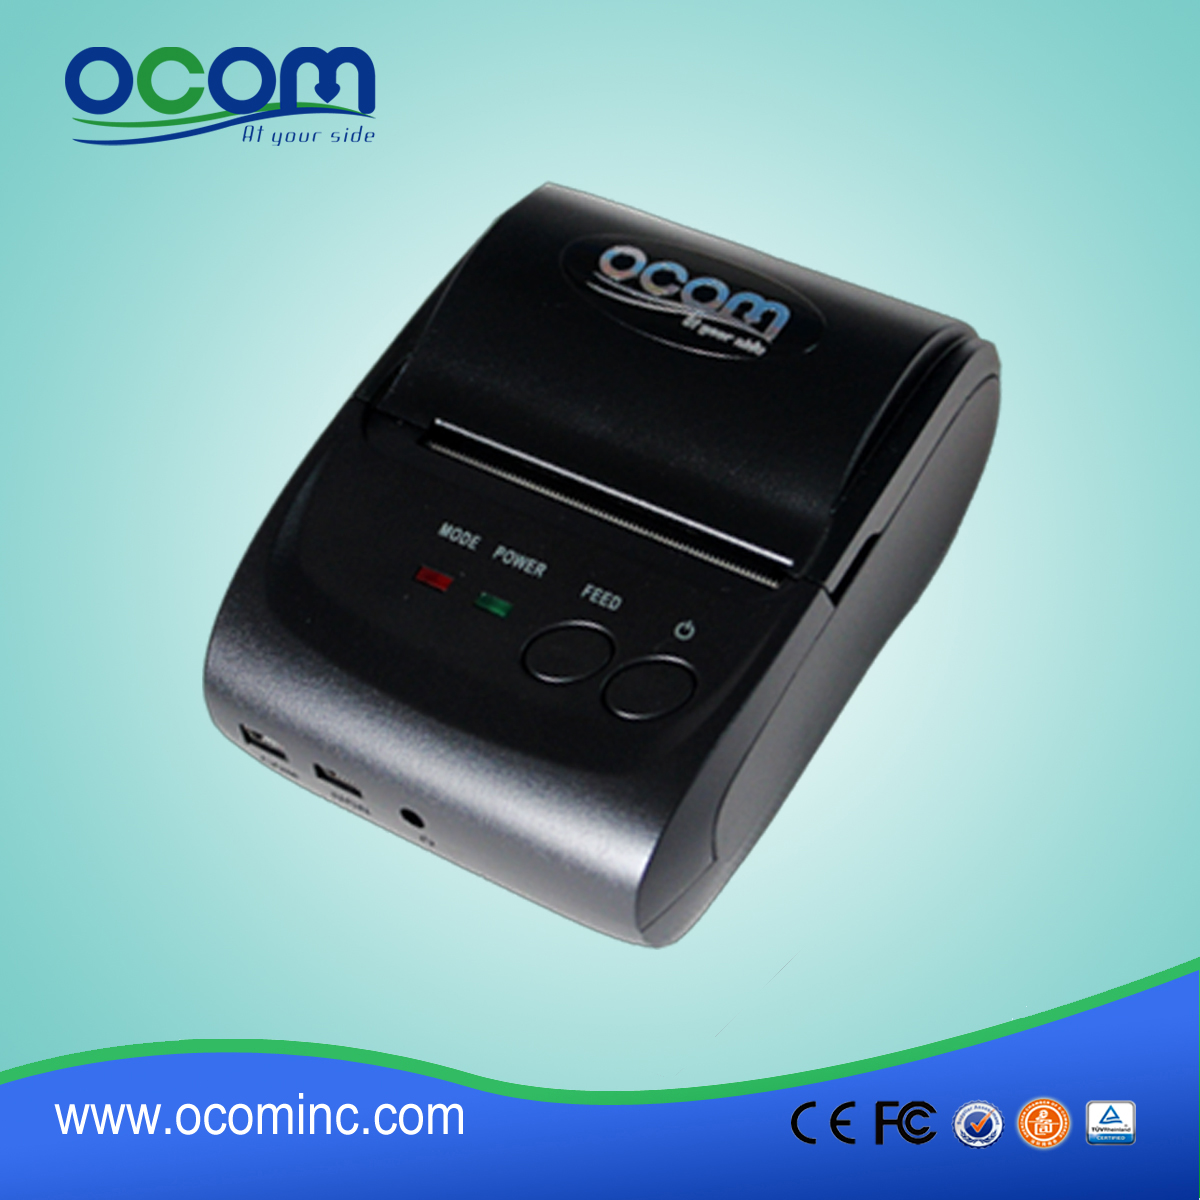 OCPP-M05: 2015 mini-impressora Bluetooth android usb, impressora térmica portátil